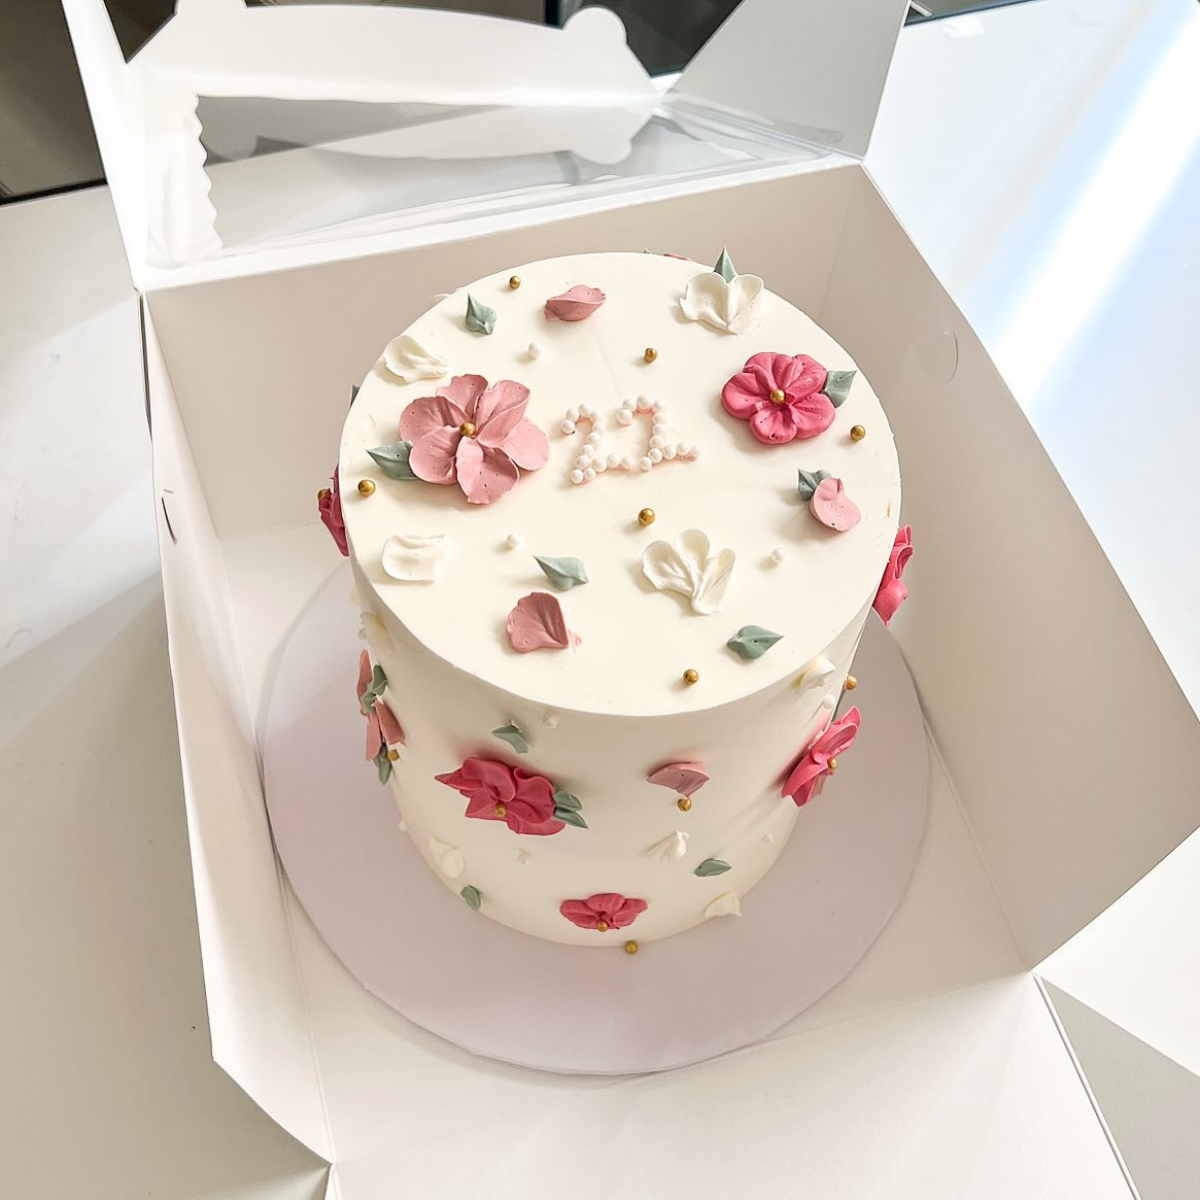 frosting florals birthfay cake